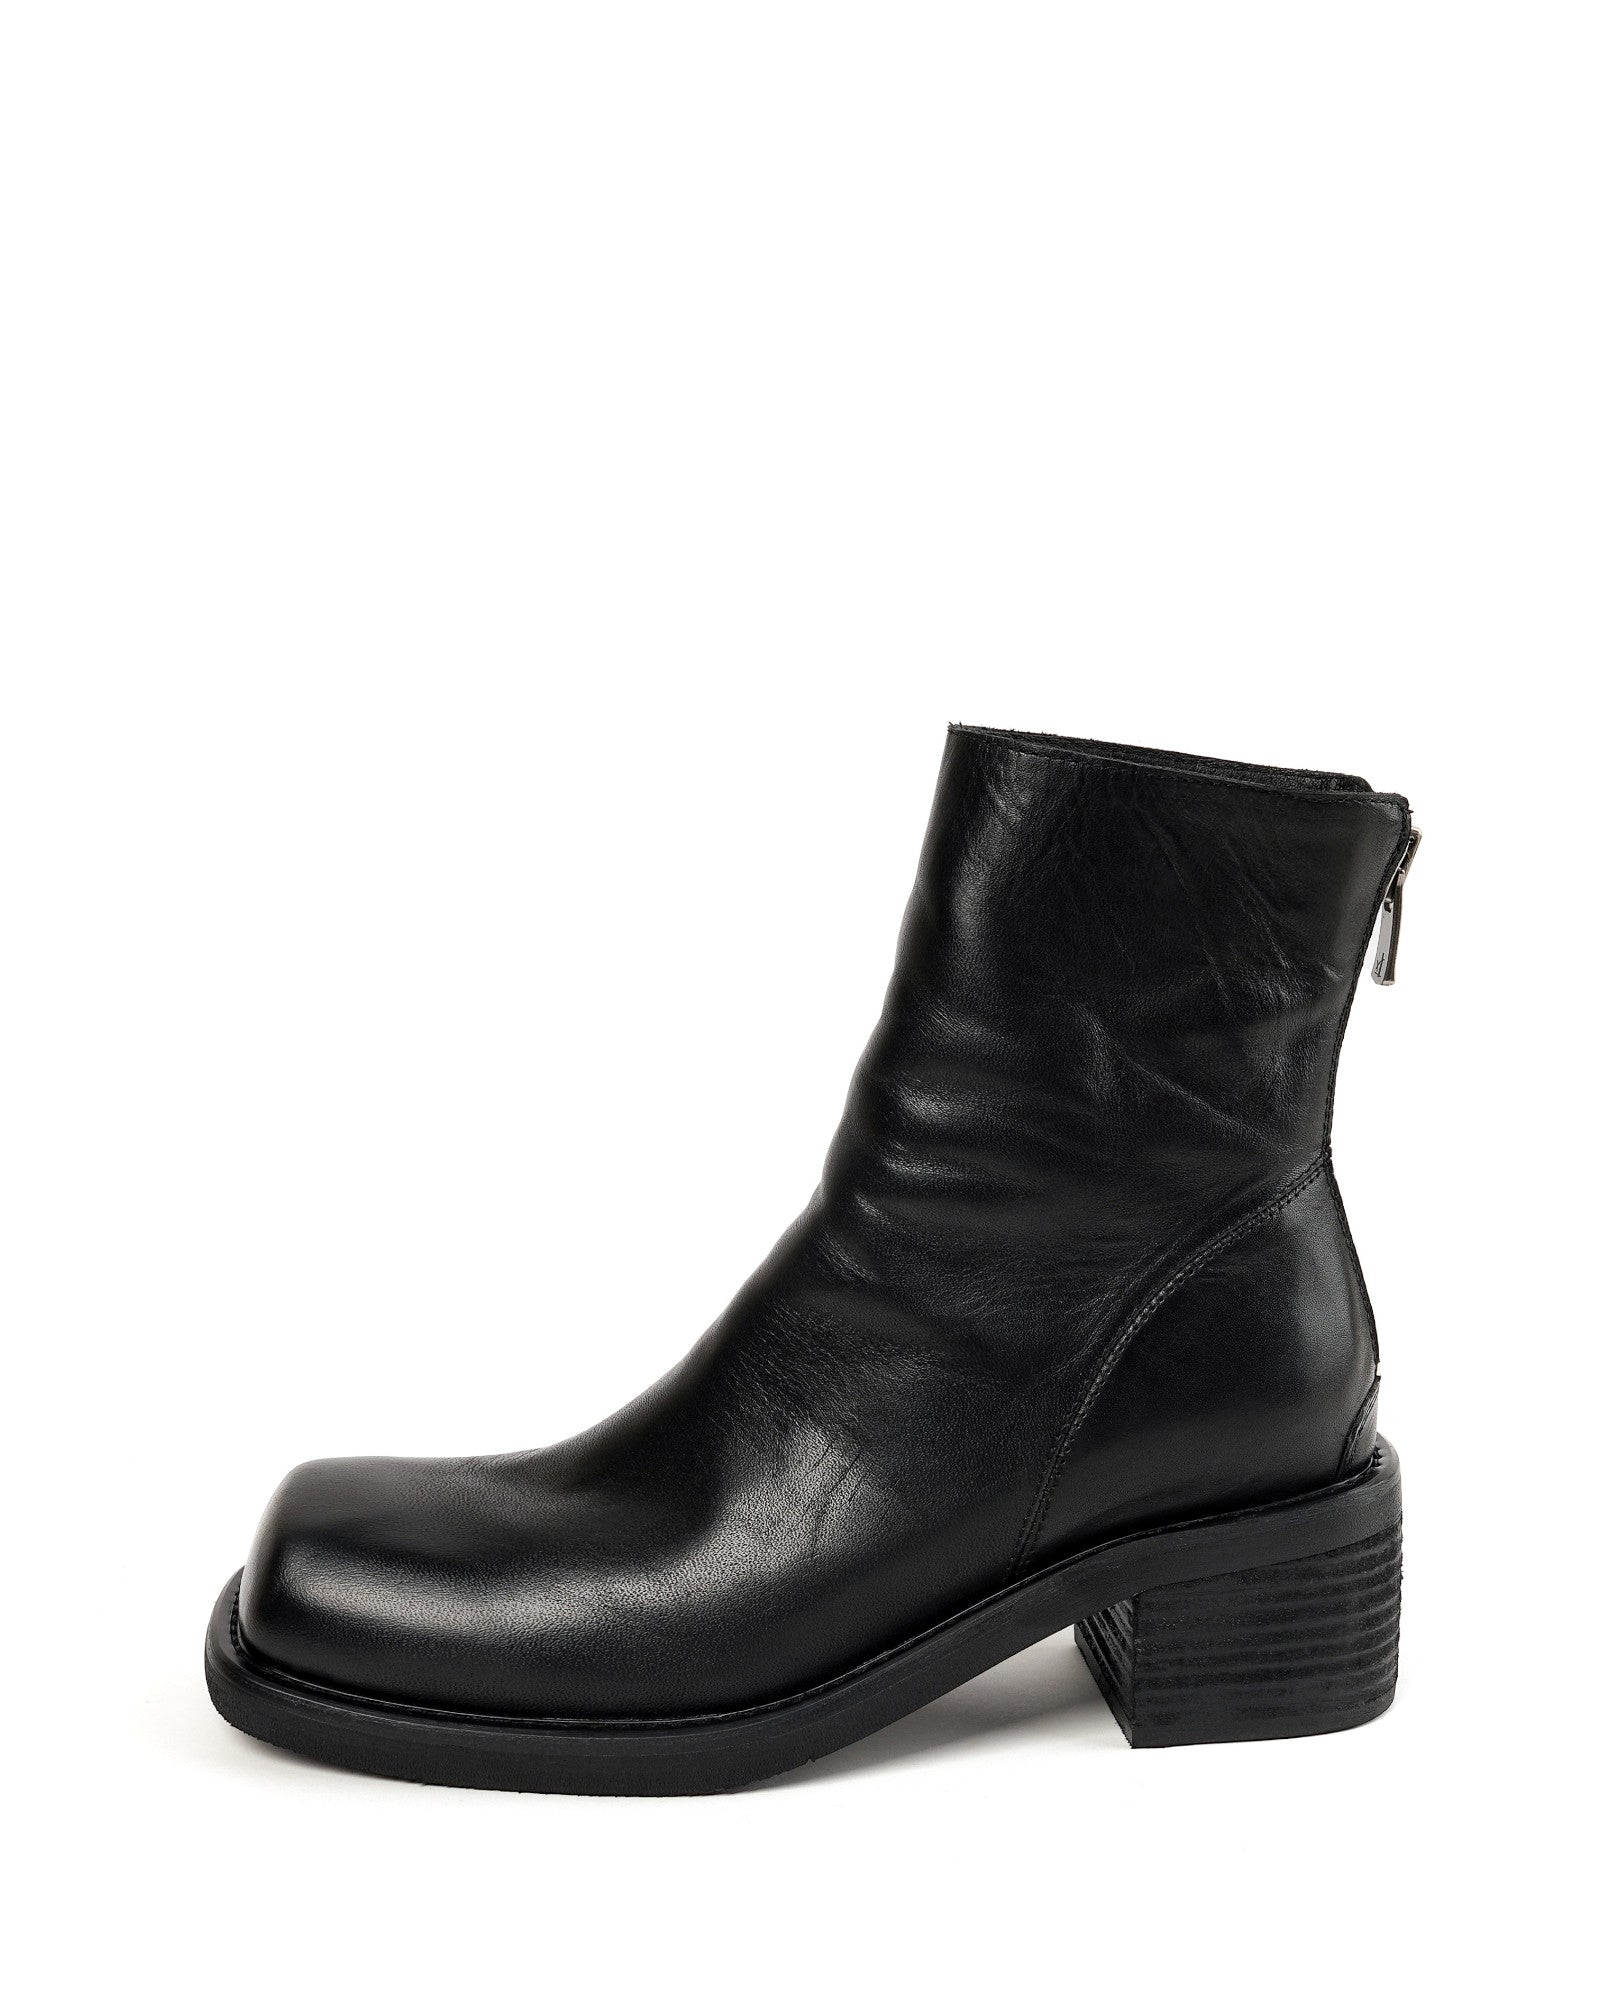 Vefa-Square-Toe-Black-Leather-Boots-1